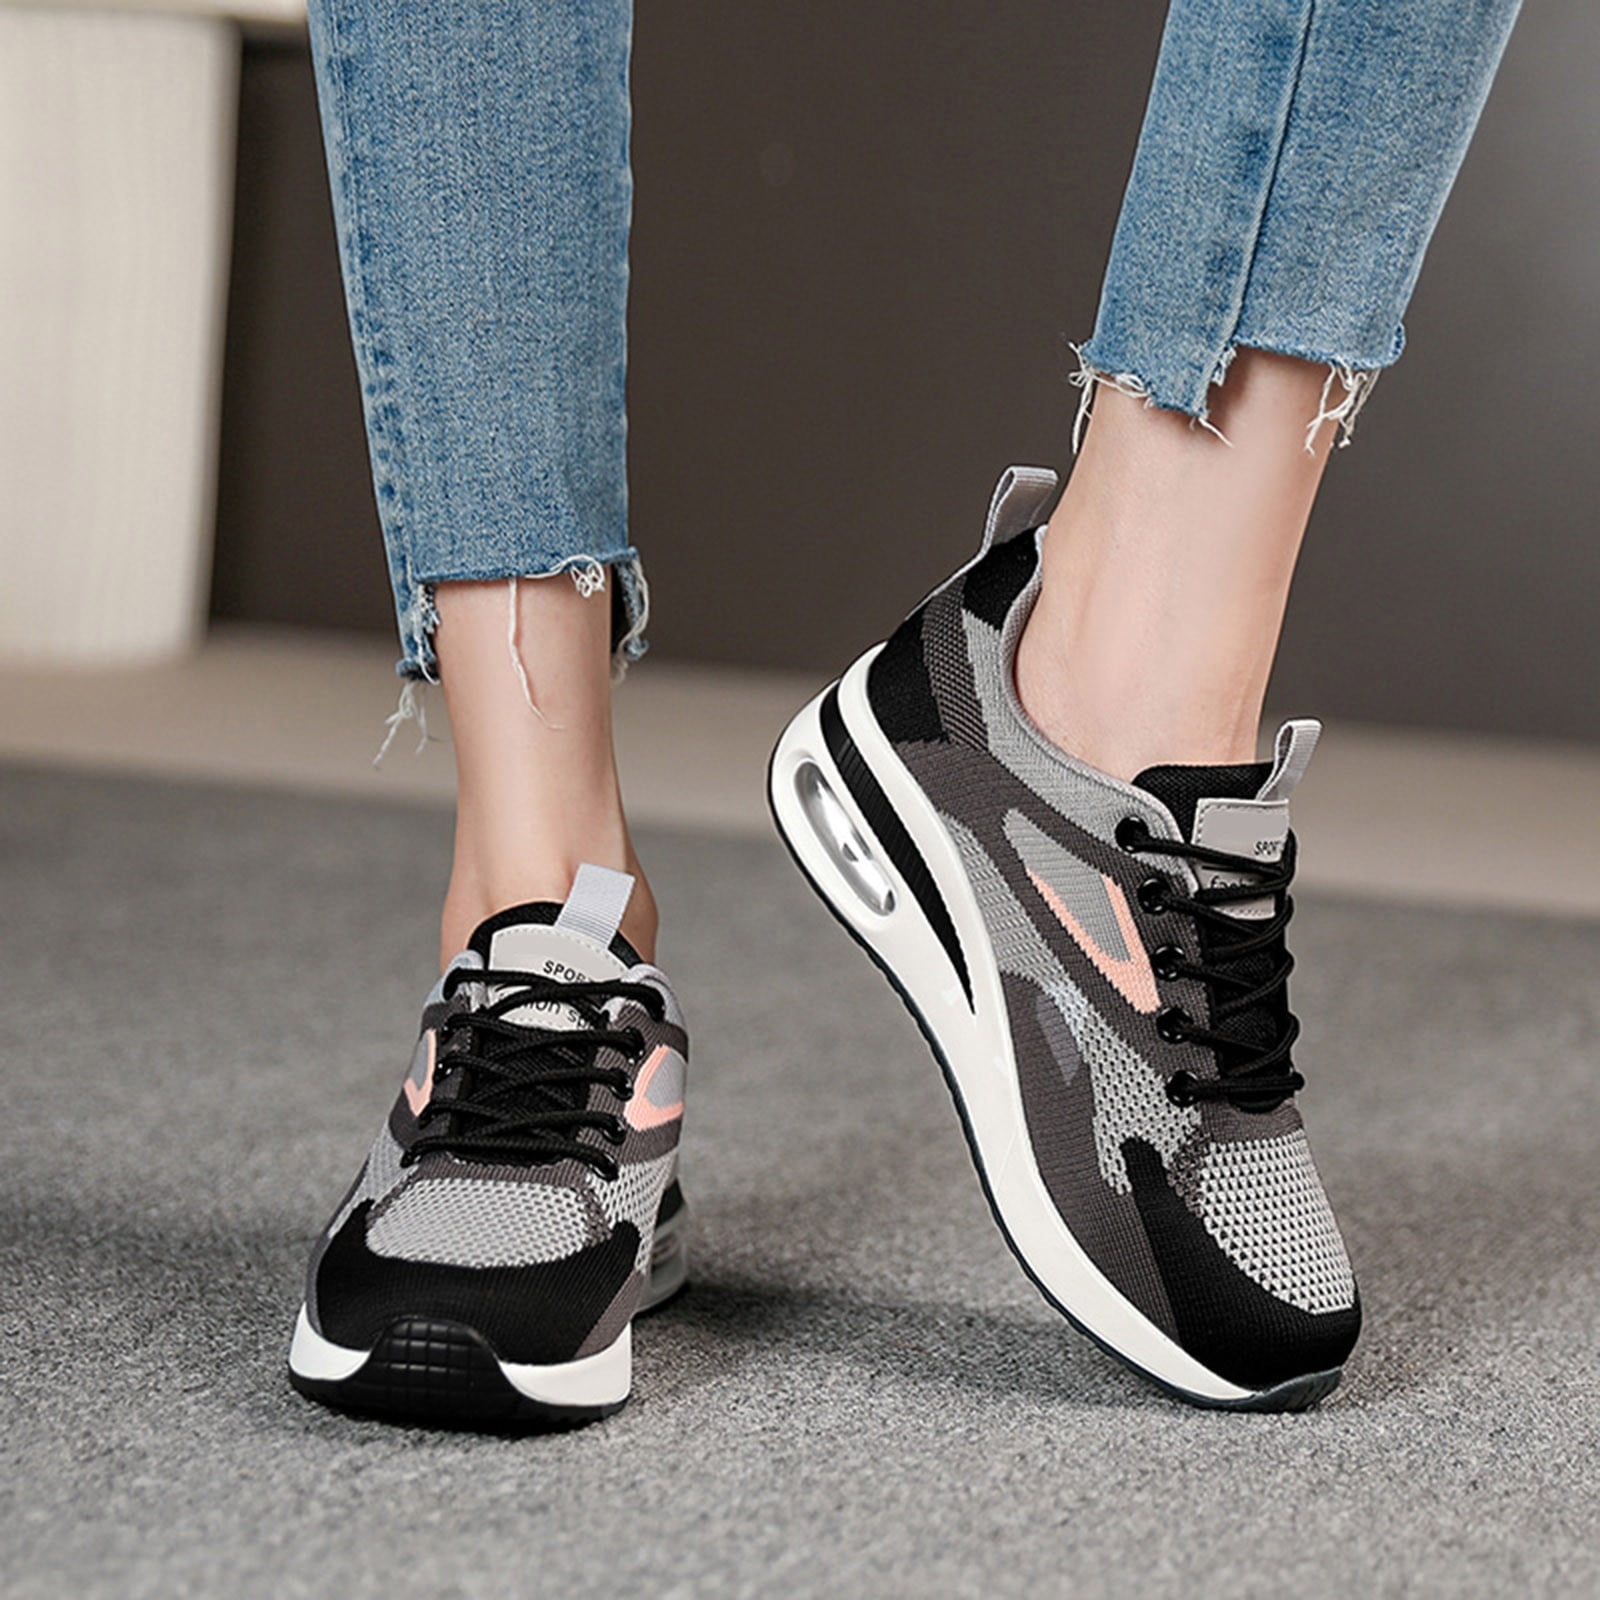 adviicd Shoe Whitener For Sneakers Women's Walking Shoes Slip-on - Sock  Sneakers Ladies Nursing Work Air Cushion Mesh Casual Running Jogging Shoes